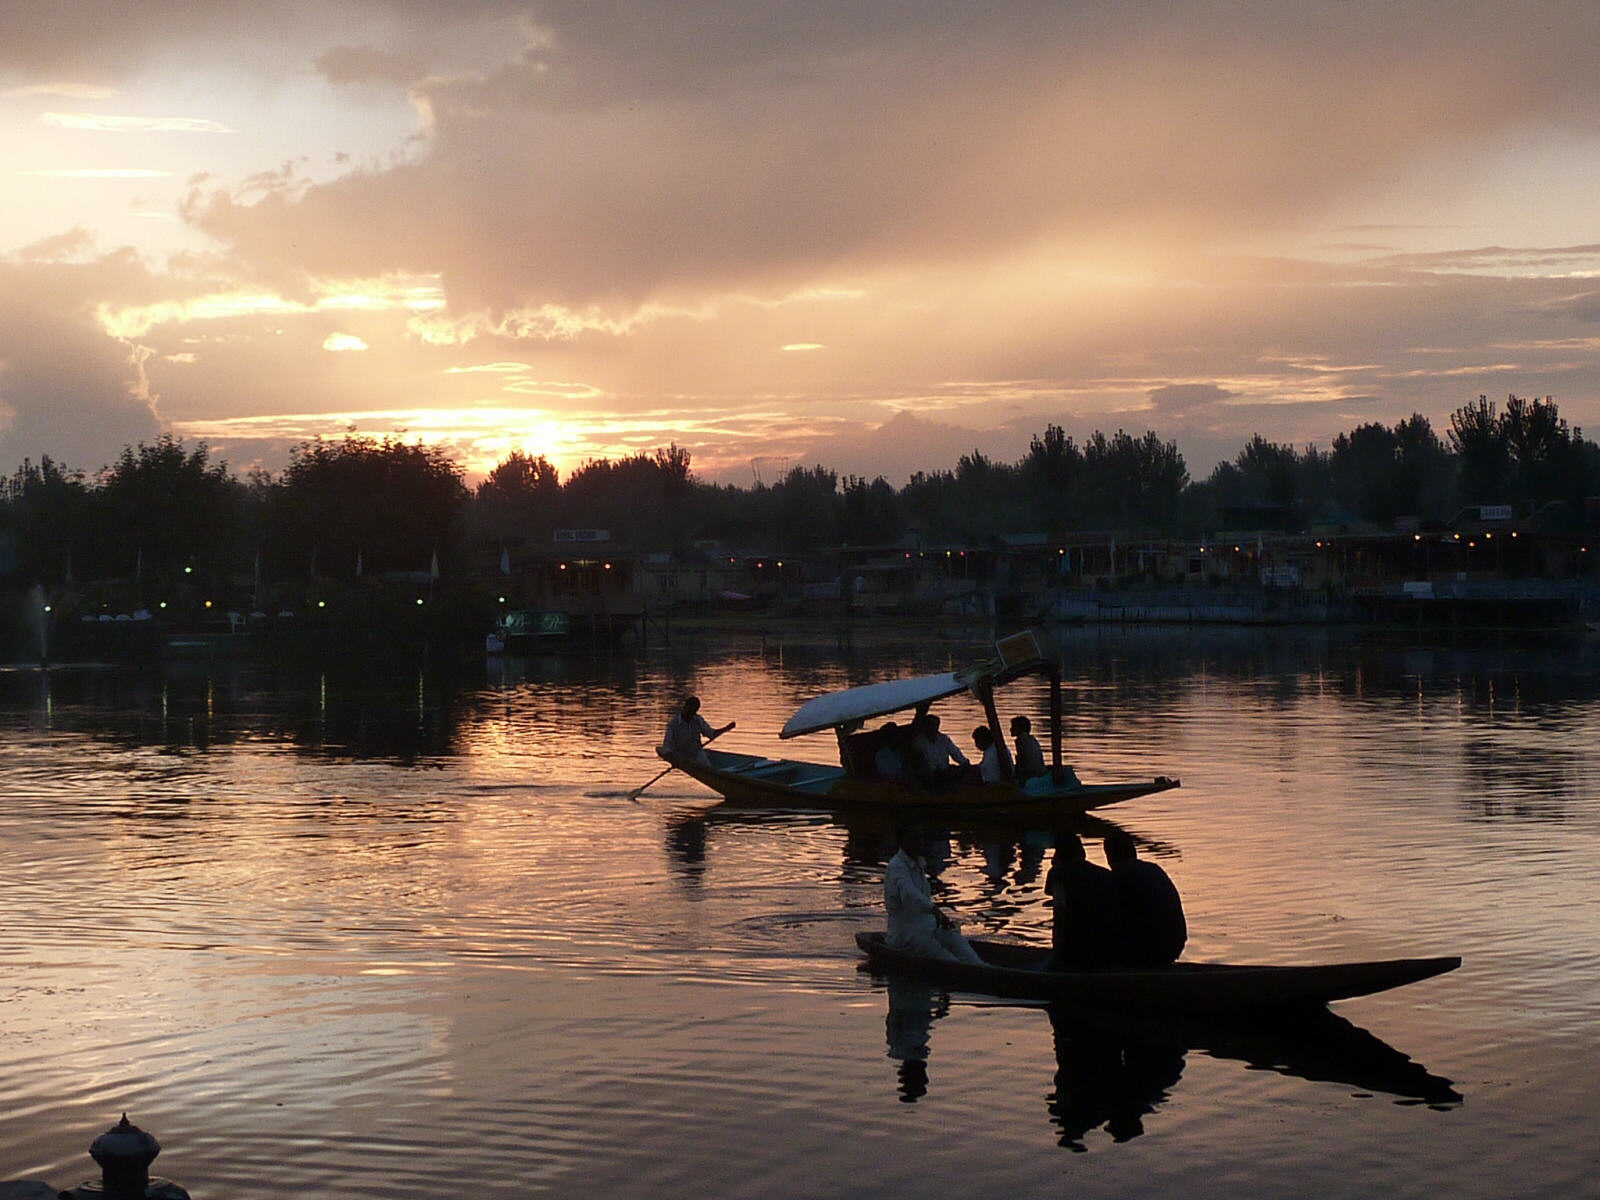 Sunset over Dal lake at Srinagar, Kashmir, India